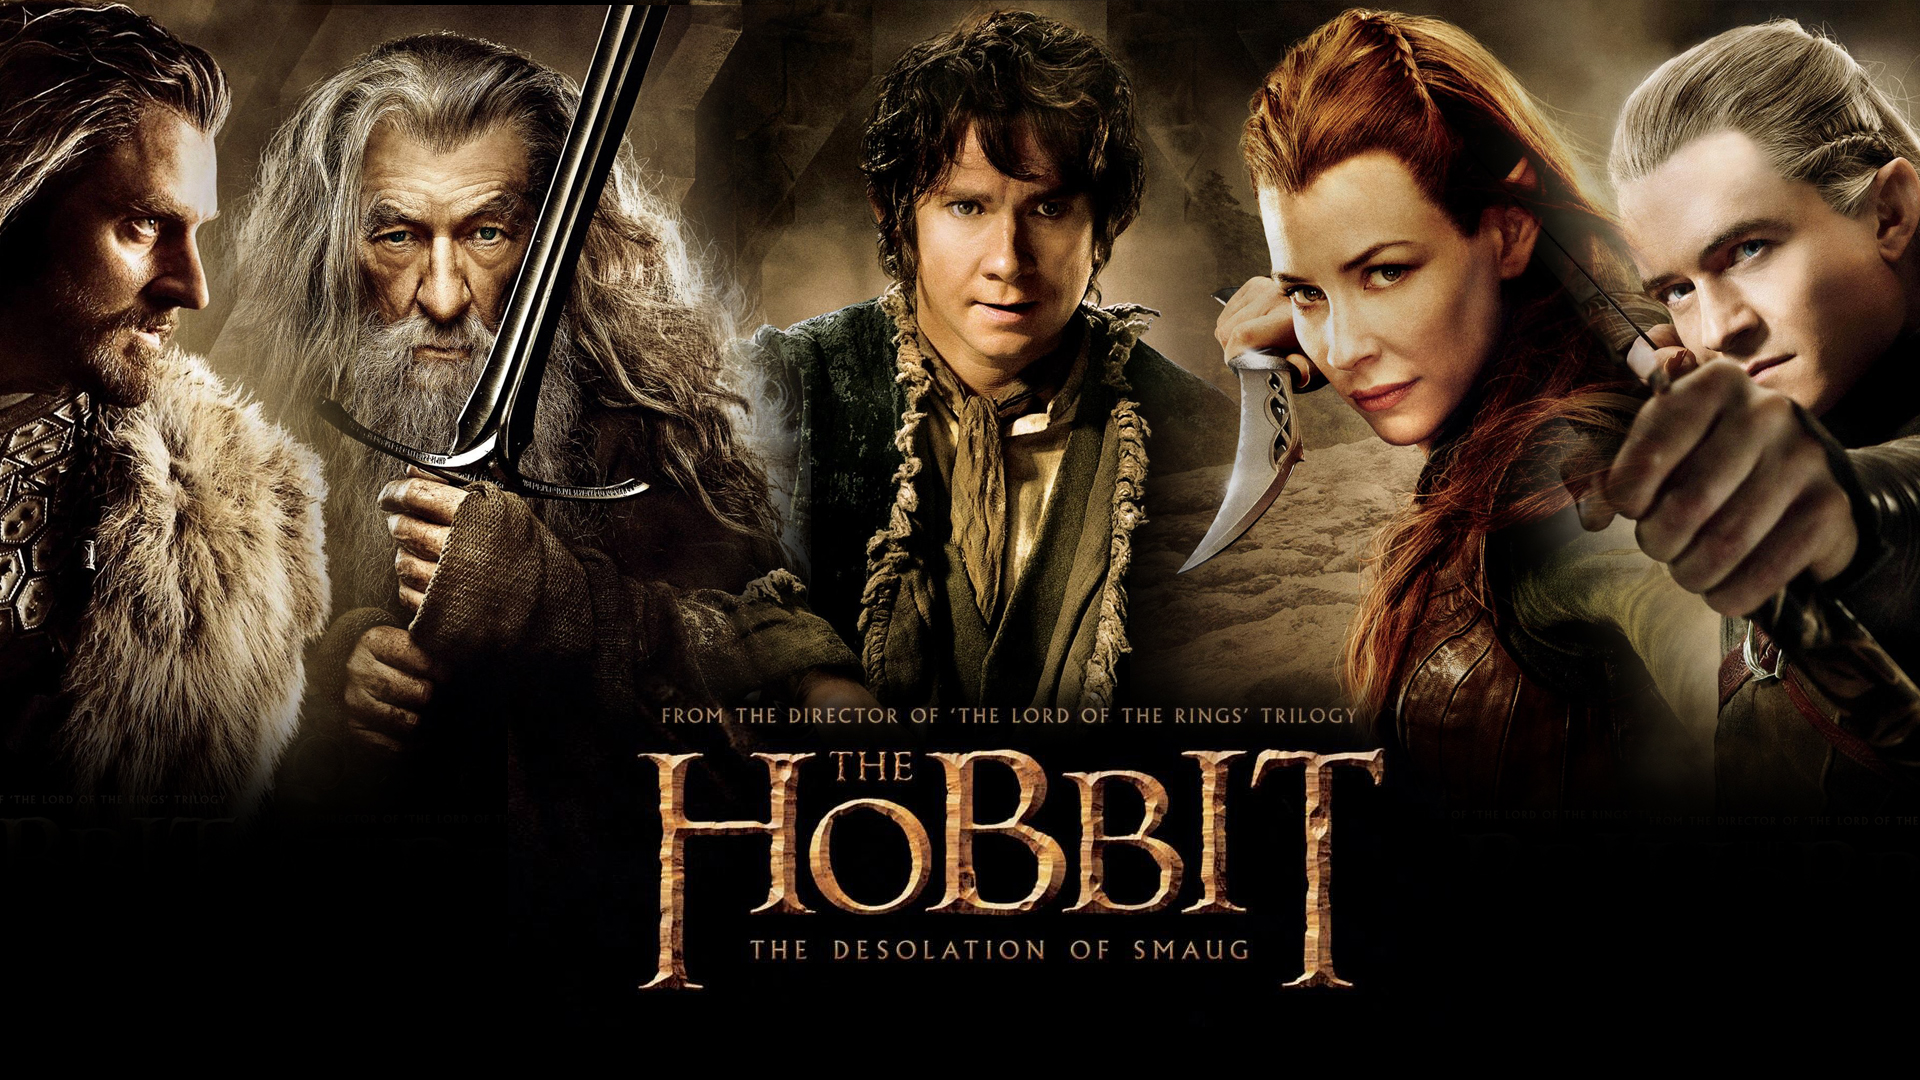 Hd Quality Wallpaper - Hobbit The Desolation Of Smaug 2013 - HD Wallpaper 